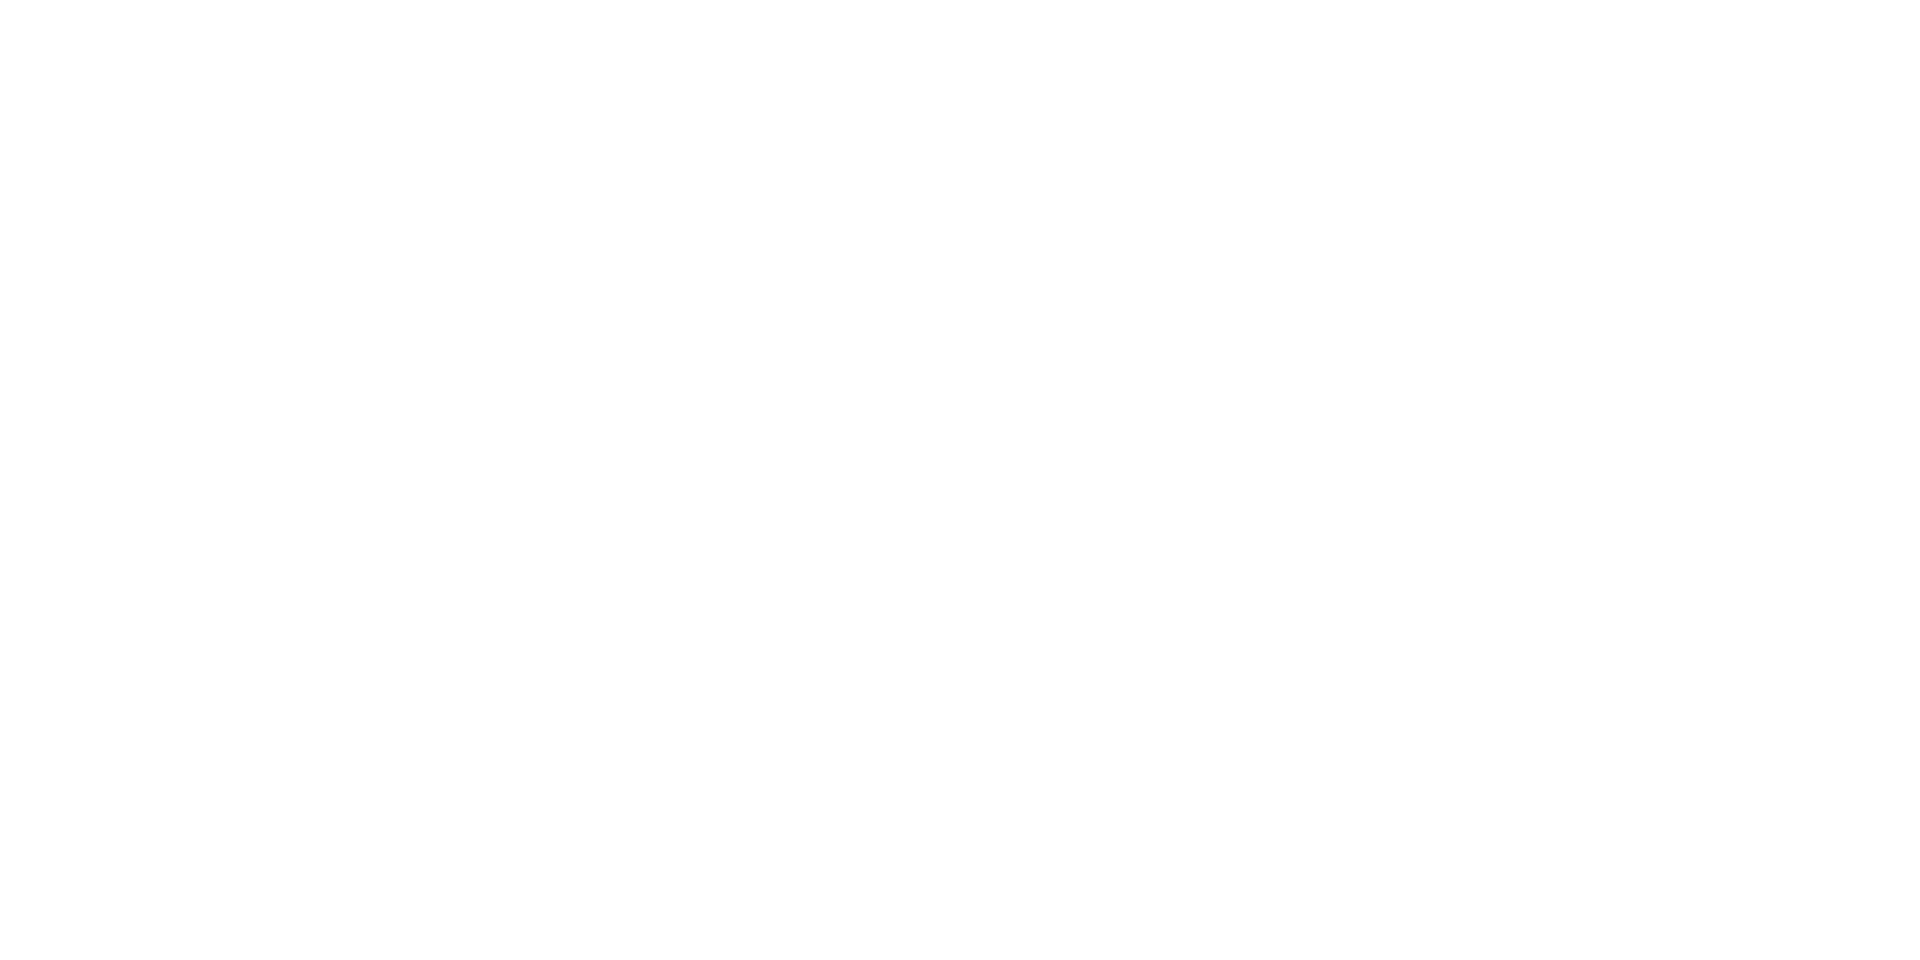 Daggerheart logo and character